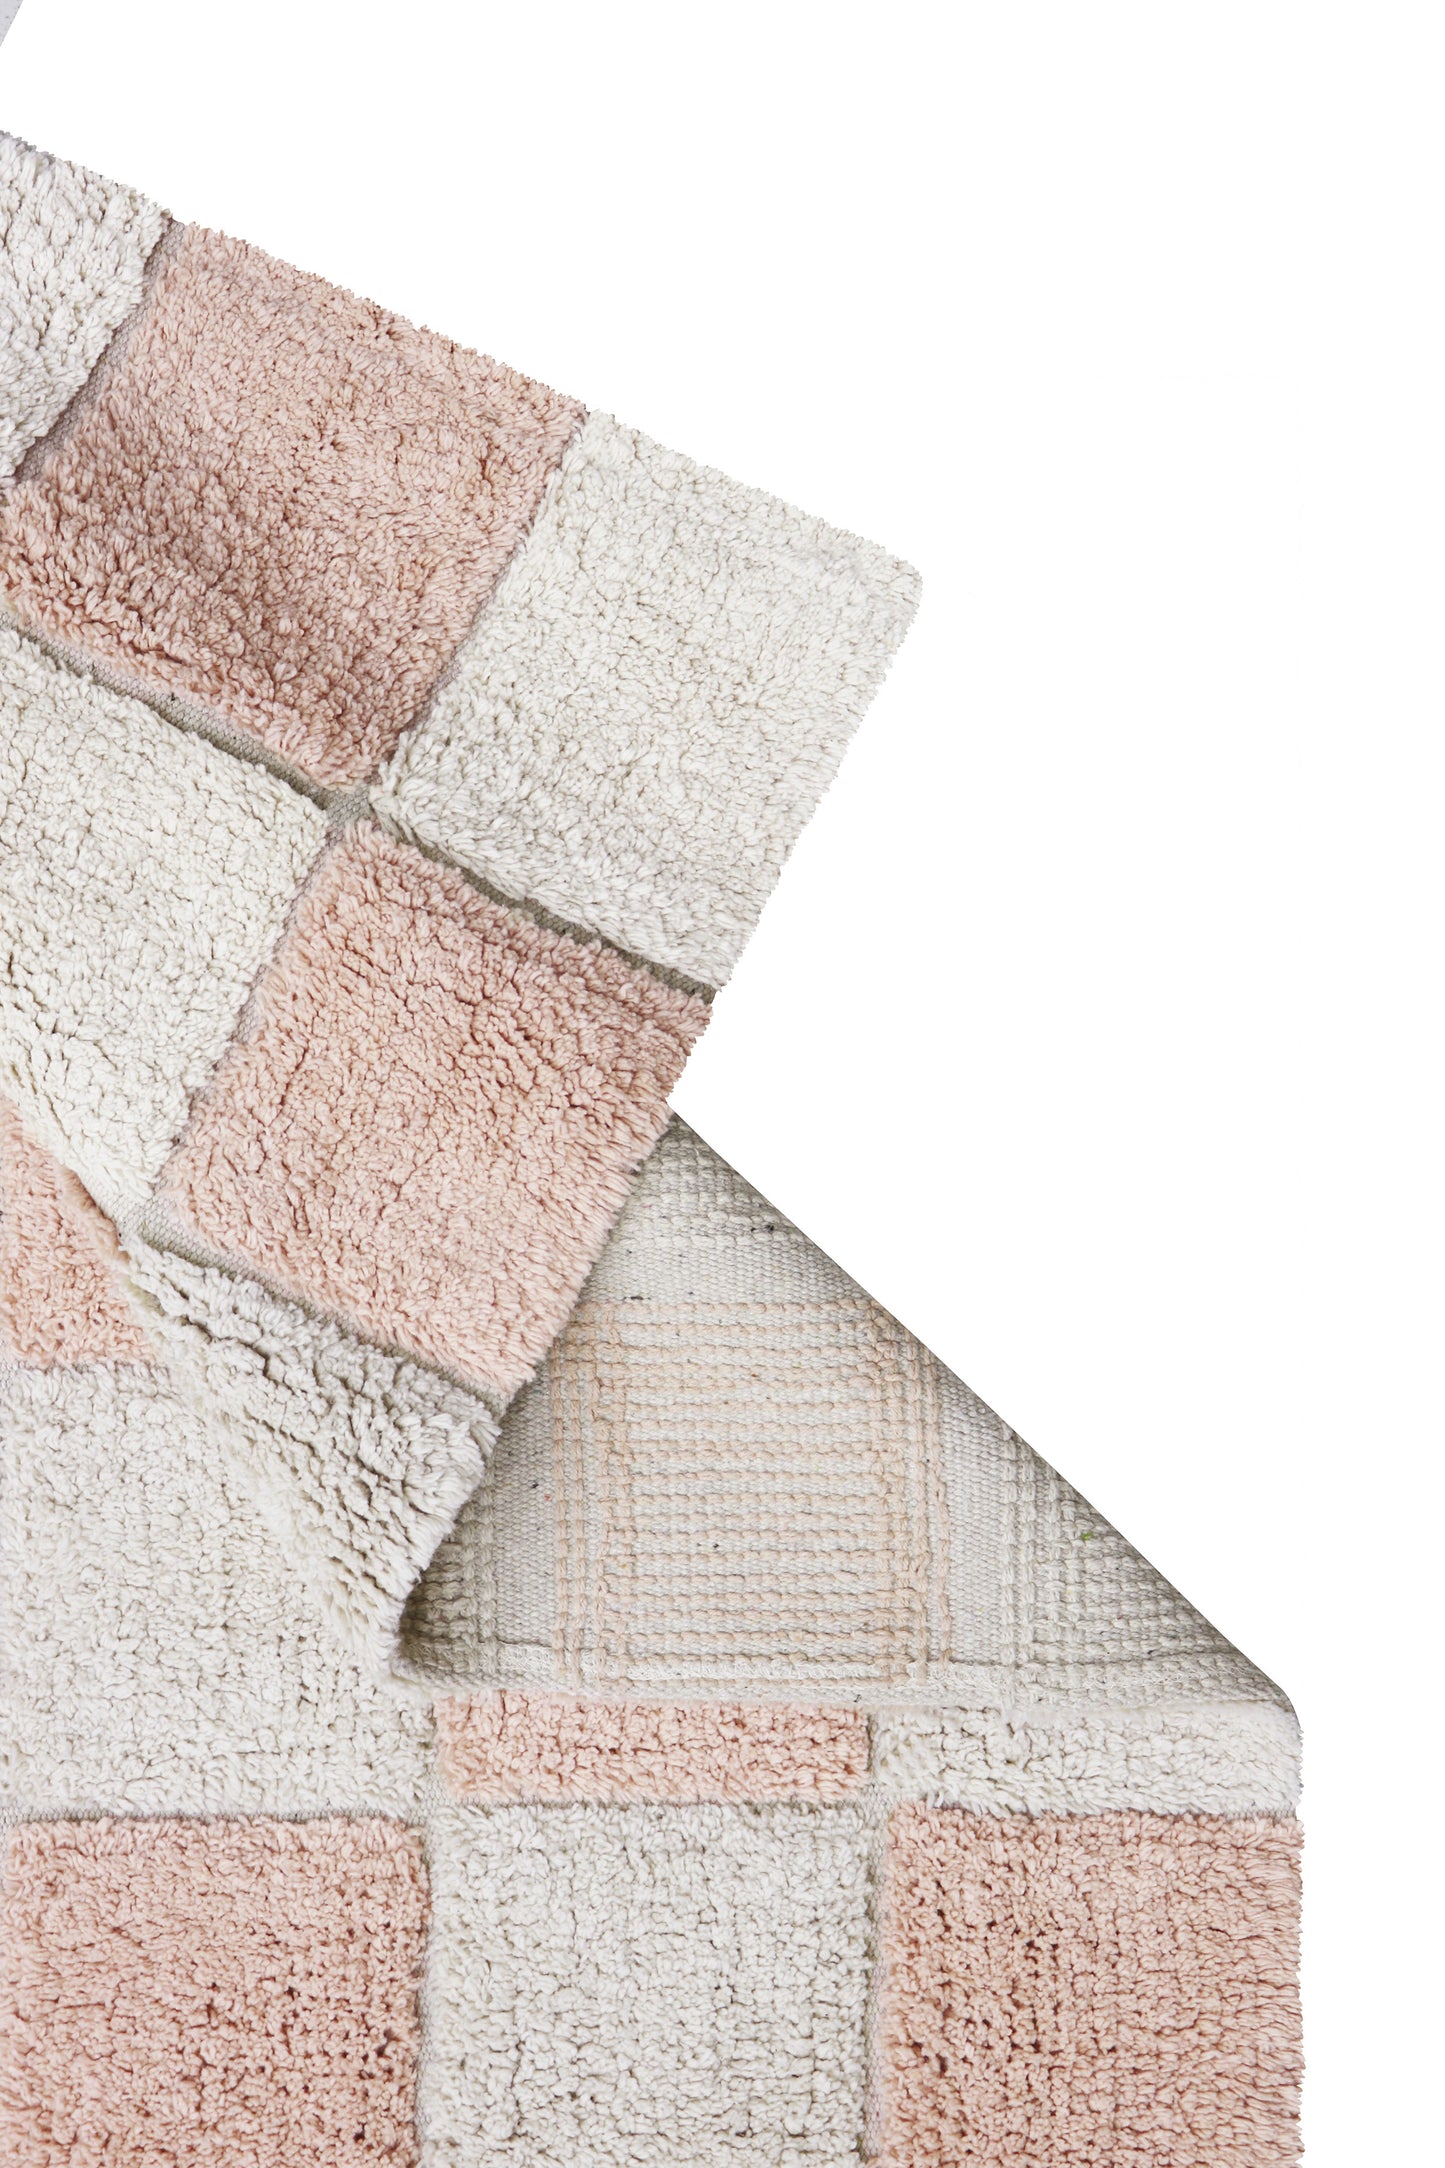 Lorena Canals Washable cotton rug - Tiles Rose - 120x160cm